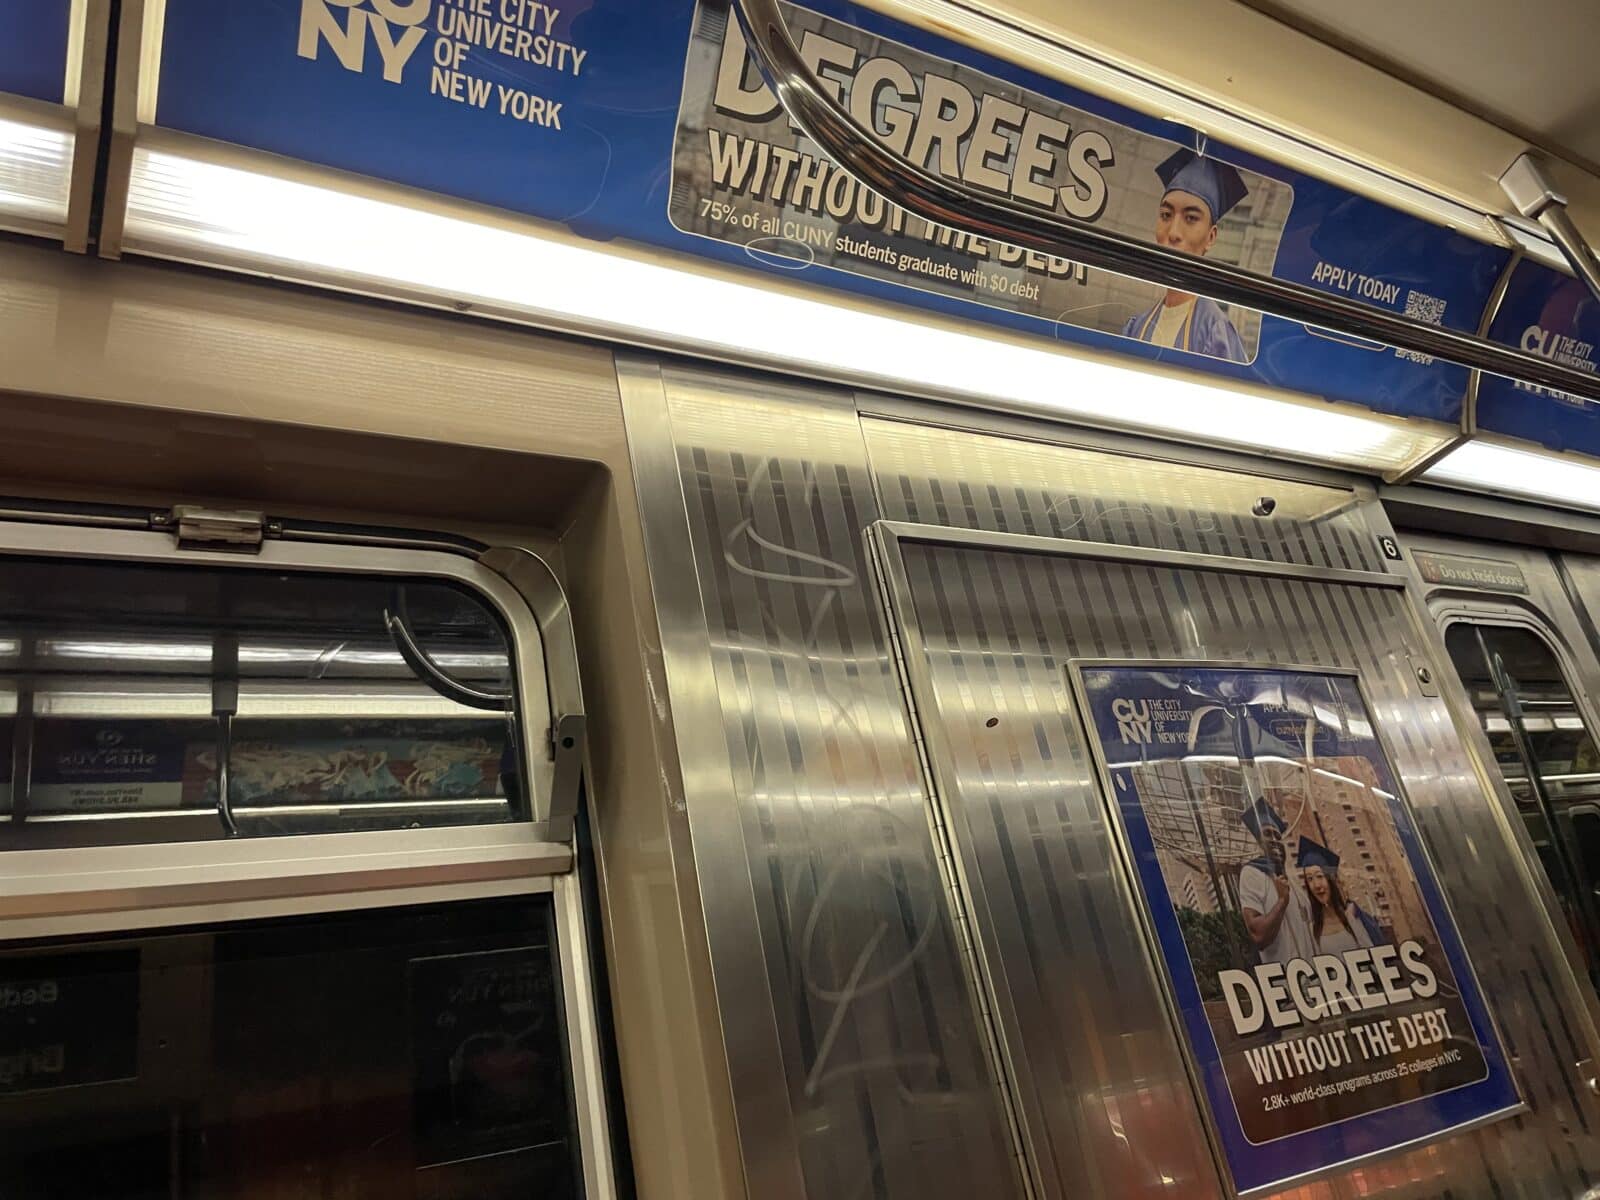 Subway ad for CUNY schools.